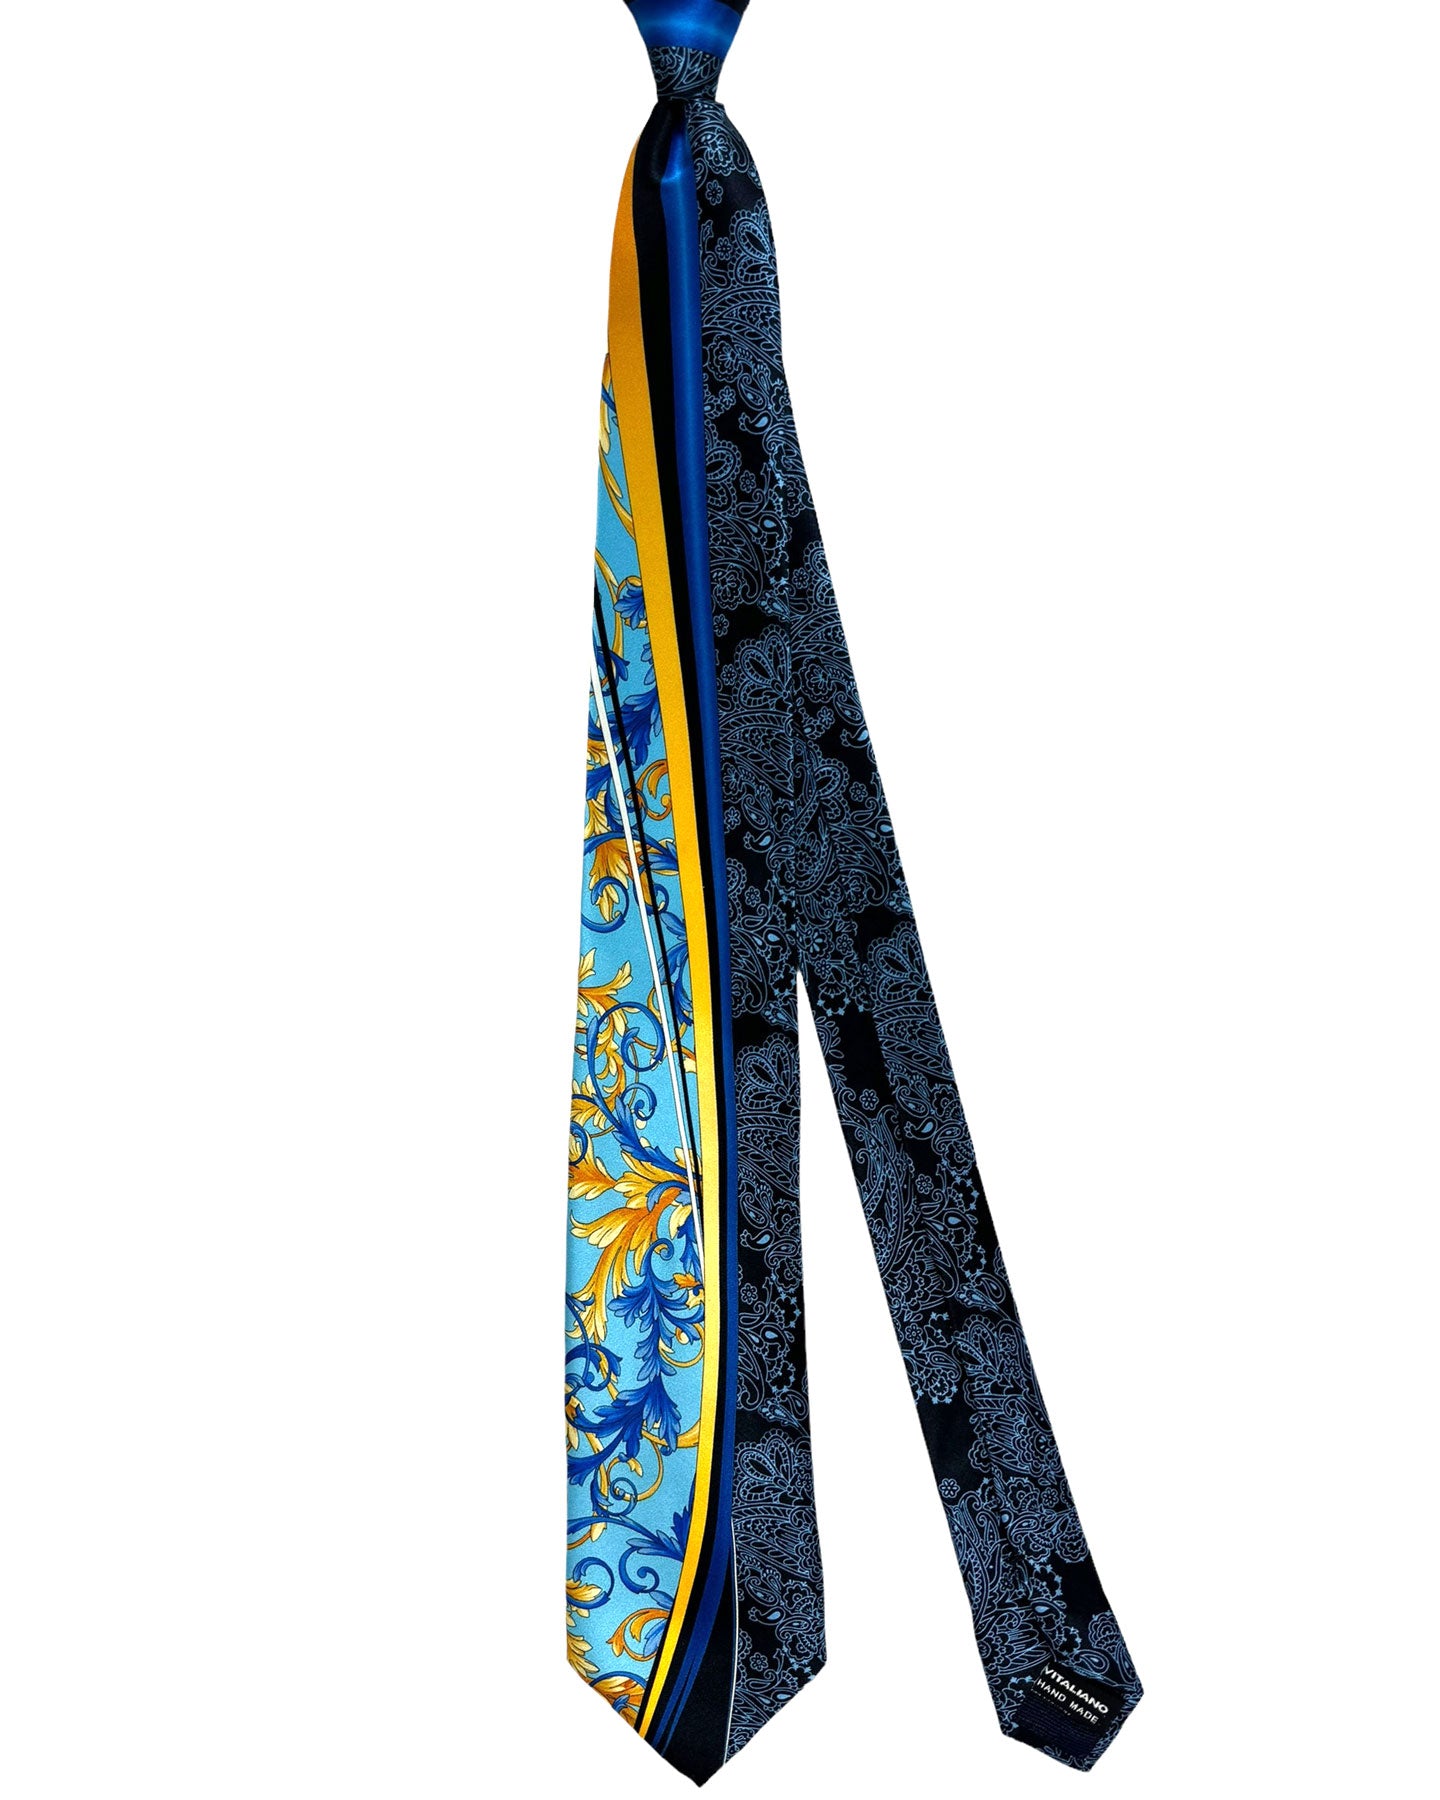 Vitaliano Pancaldi Silk Tie Black Blue Orange Gold Paisley Ornamental Design